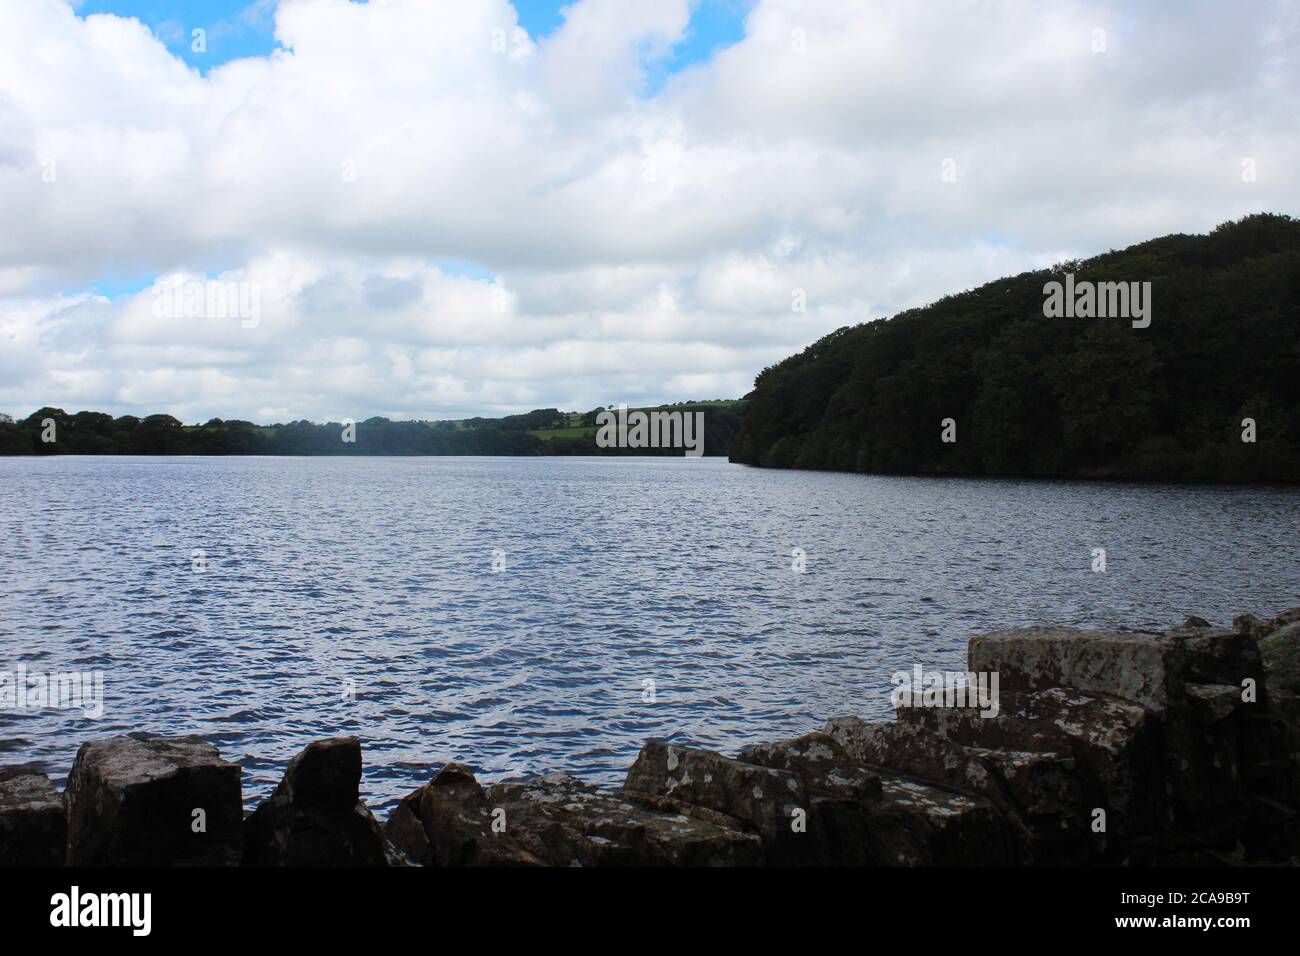 Anglezarke vista lago artificiale dal ponte, inc alberi, a Anglezarke, Chorley, Inghilterra Foto Stock